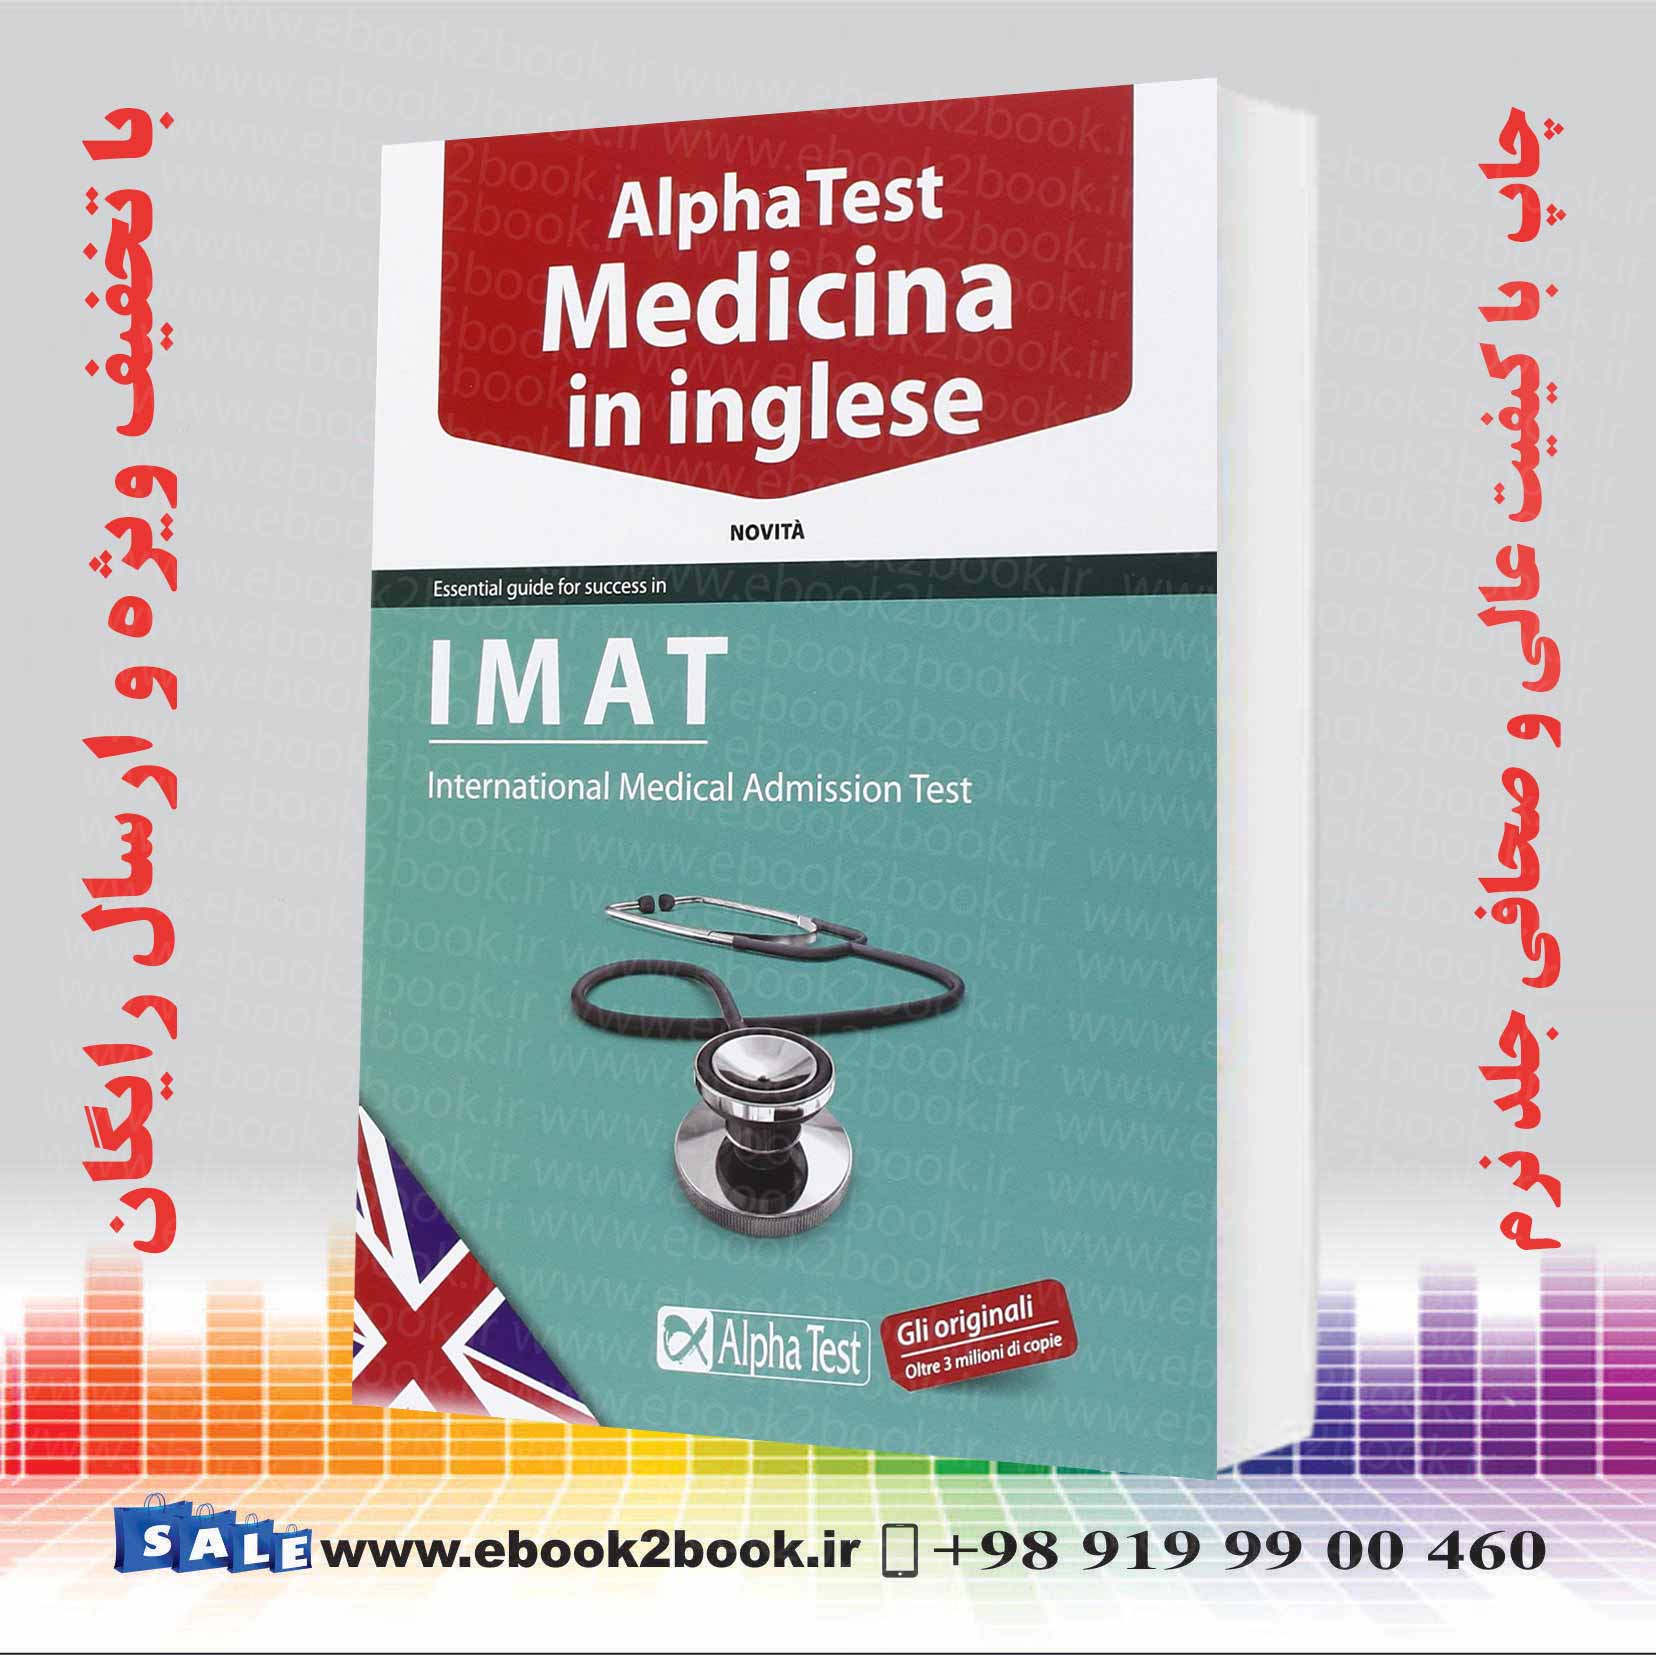 Alpha Test Medicina In Inglese Imat فروشگاه کتاب ایبوک تو بوک